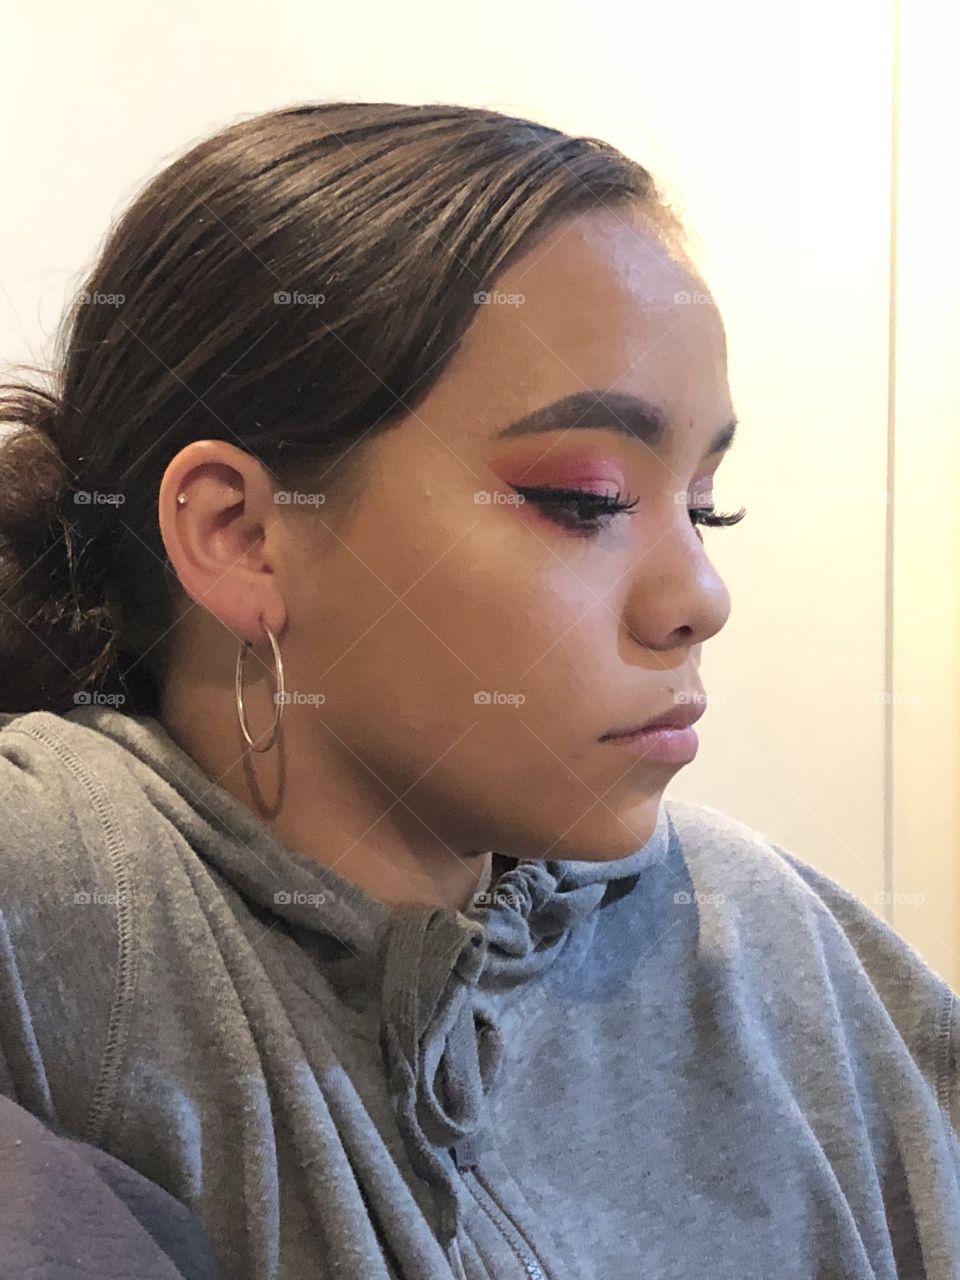 Teenagers and makeup 